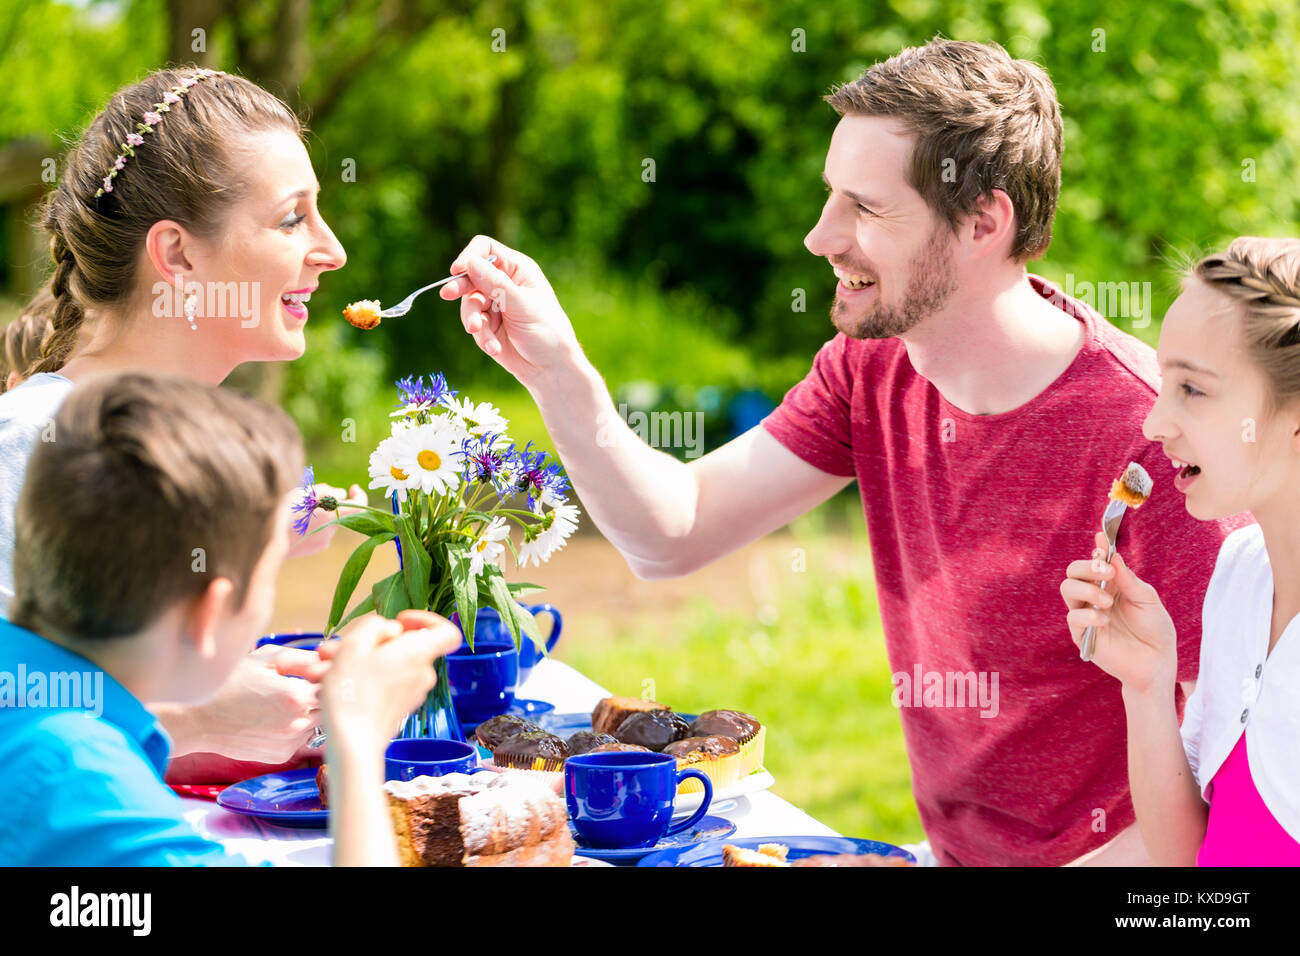 Family having fun at coffee time in garden Stock Photo